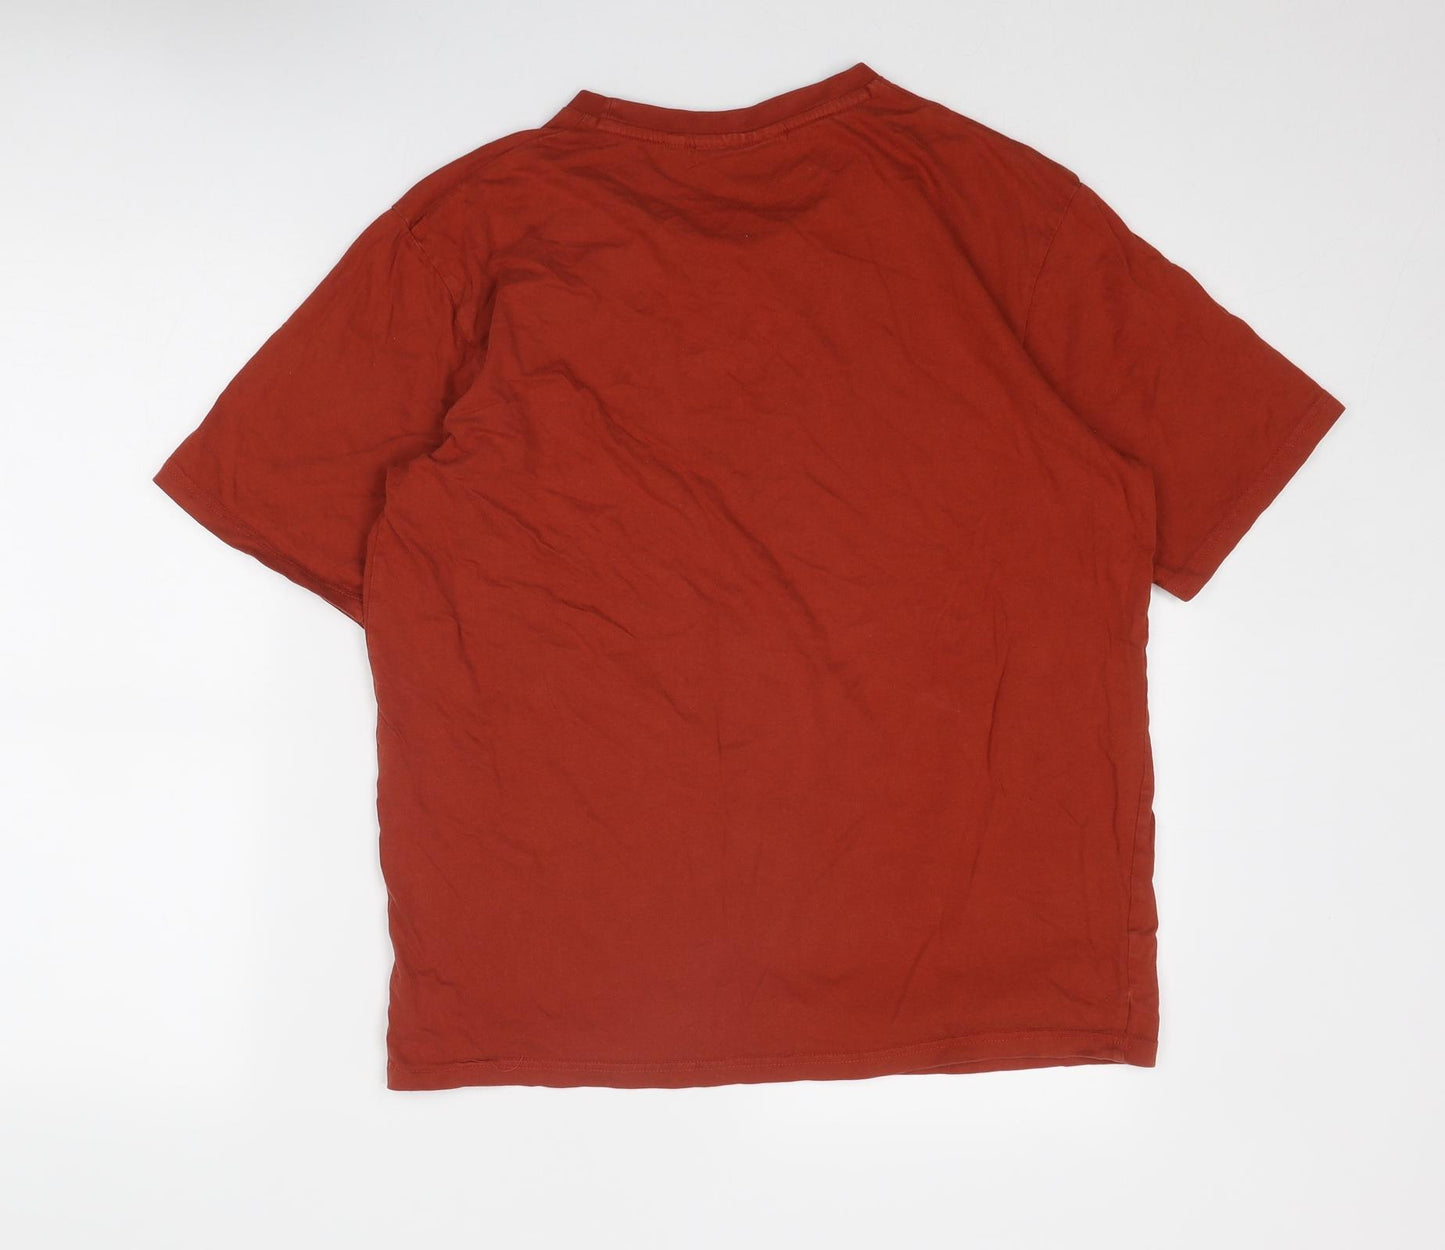 Peter Storm Mens Orange Polyester T-Shirt Size M Round Neck